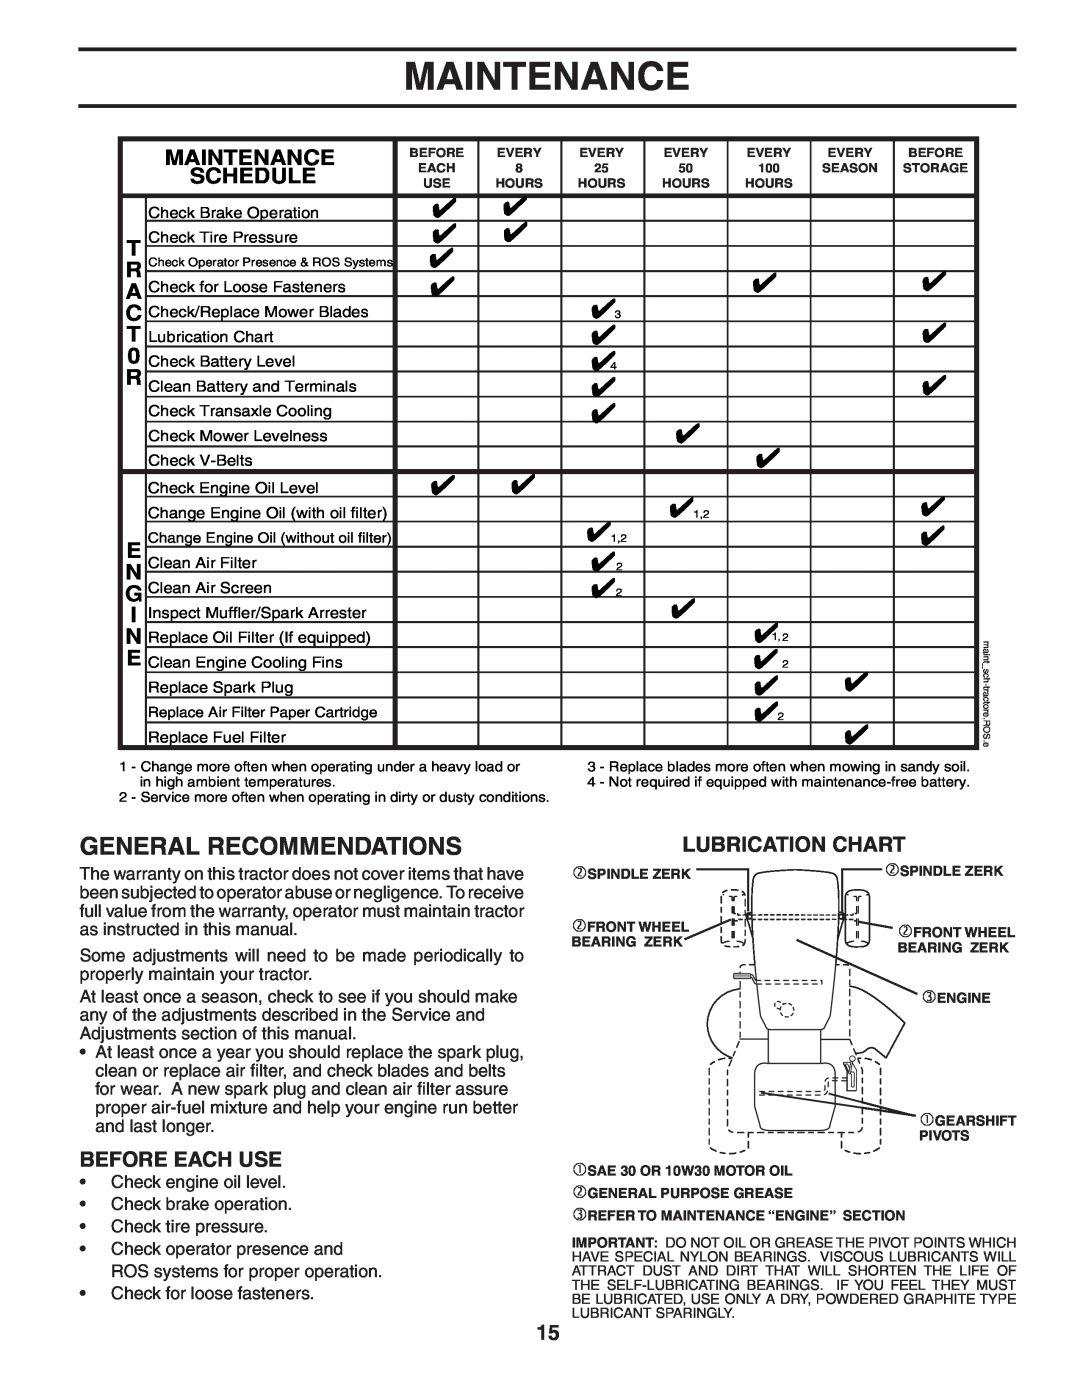 Murray MB1842LT manual Maintenance, Lubrication Chart, Before Each Use 